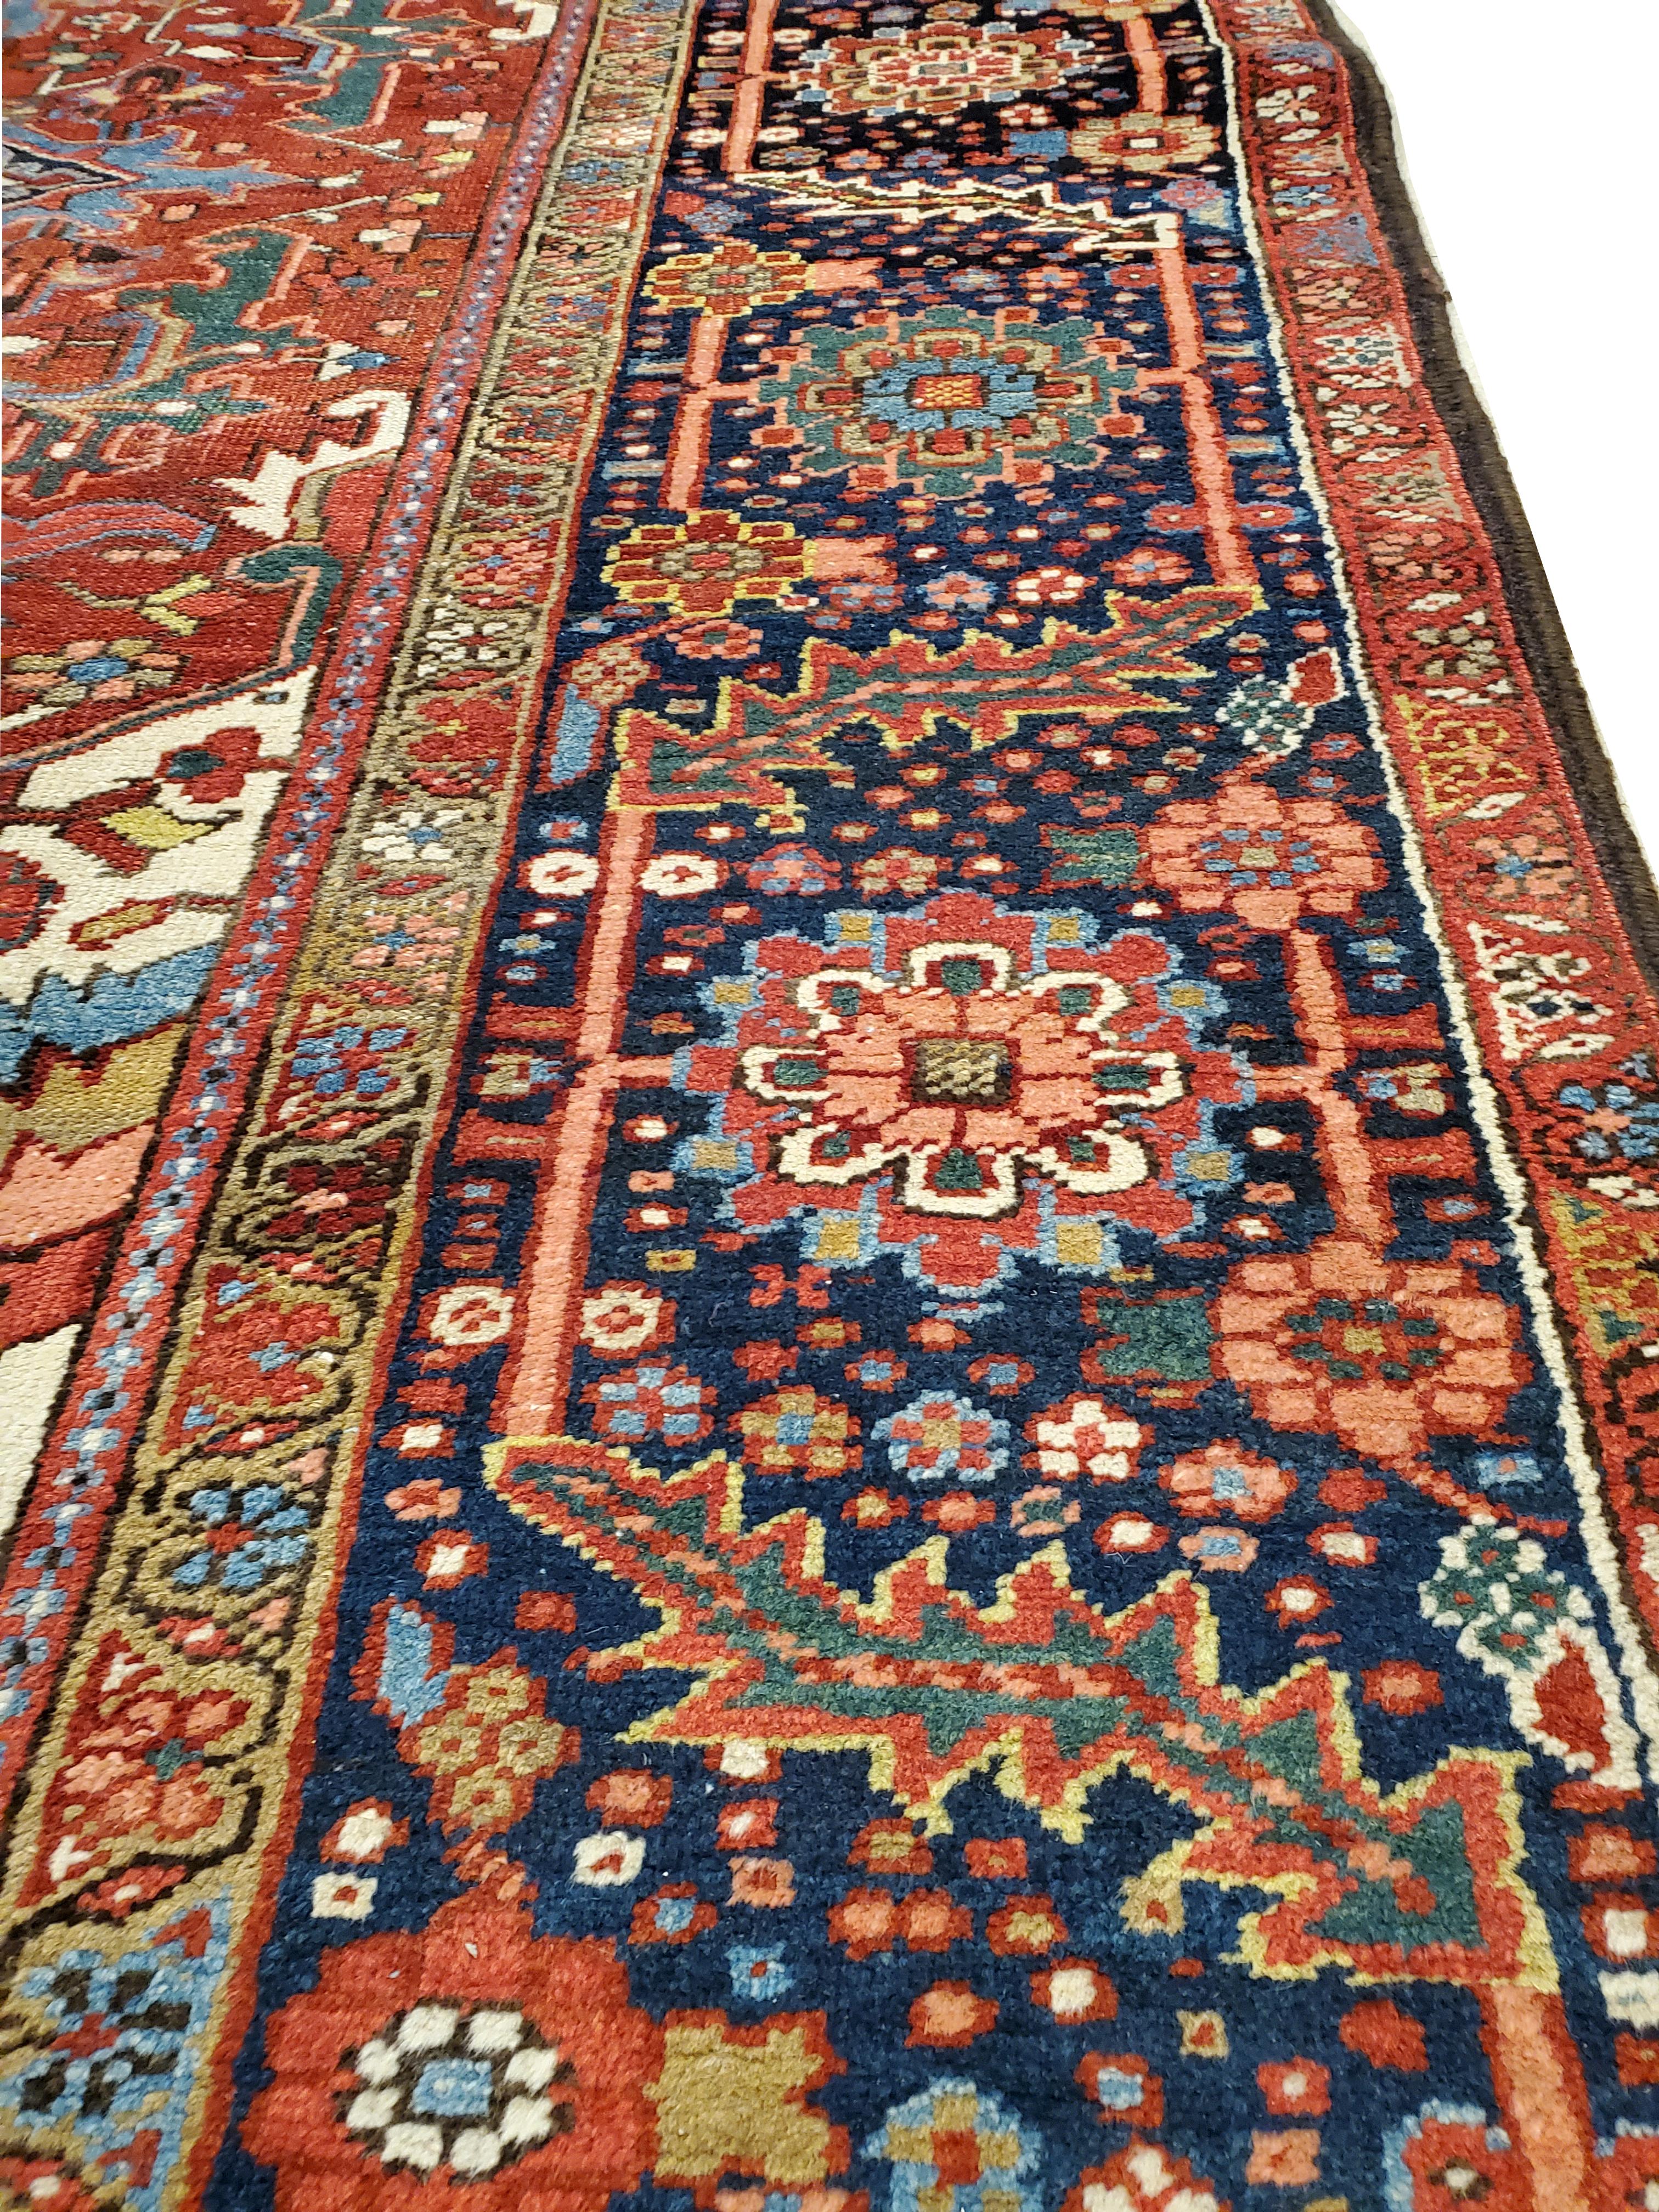 Heriz Serapi Antique Persian Heriz Carpet, Handmade Wool Oriental Rug, Rust, Navy, Lt Blue For Sale